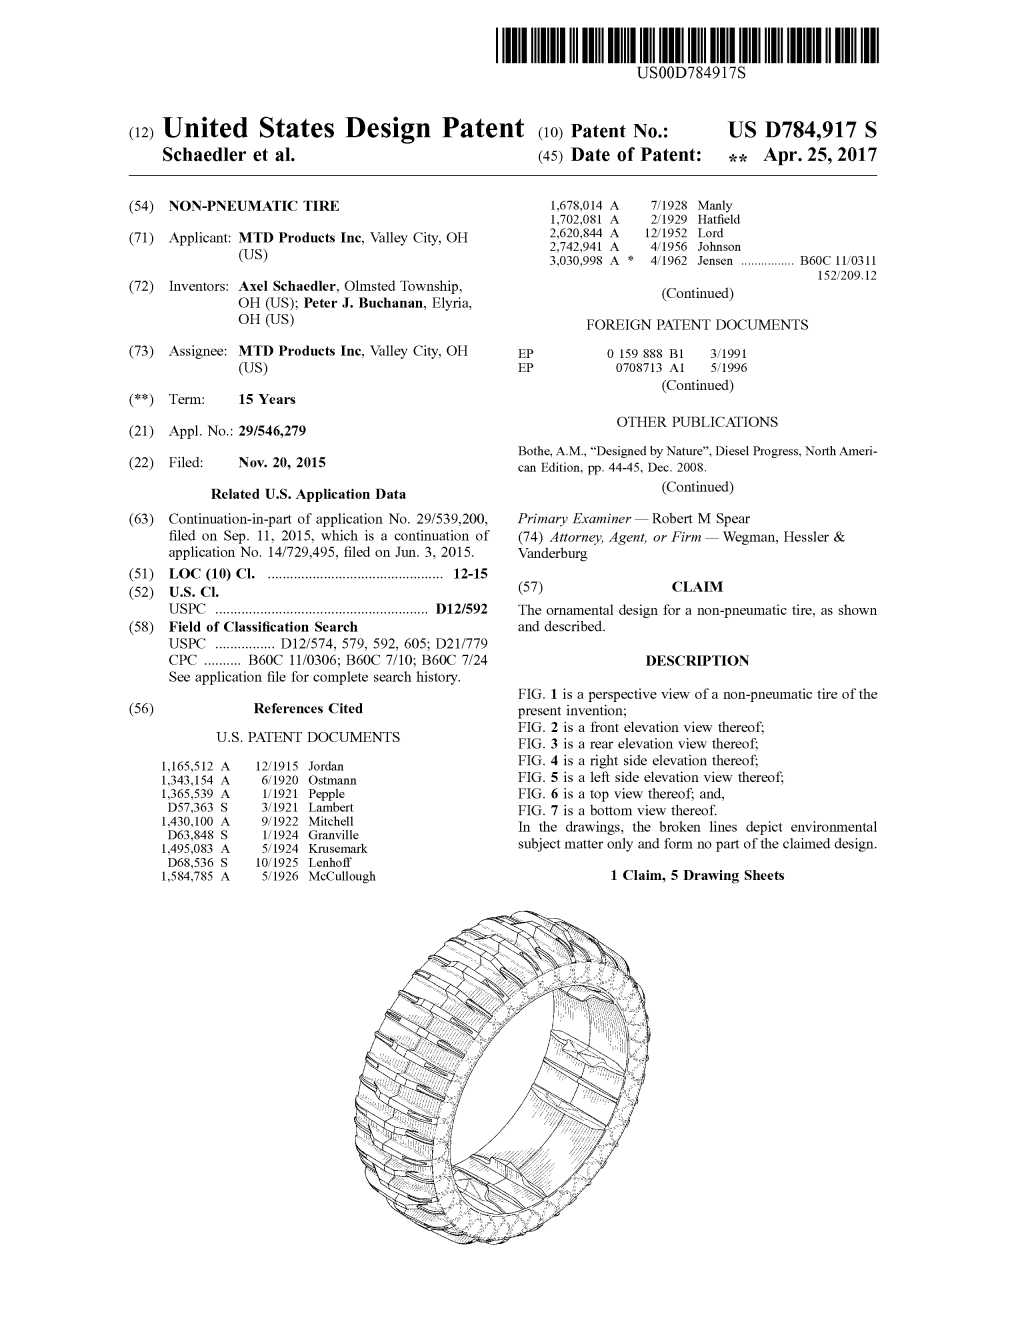 (12) United States Design Patent (10) Patent No.: US D784,917 S Schaedler Et Al